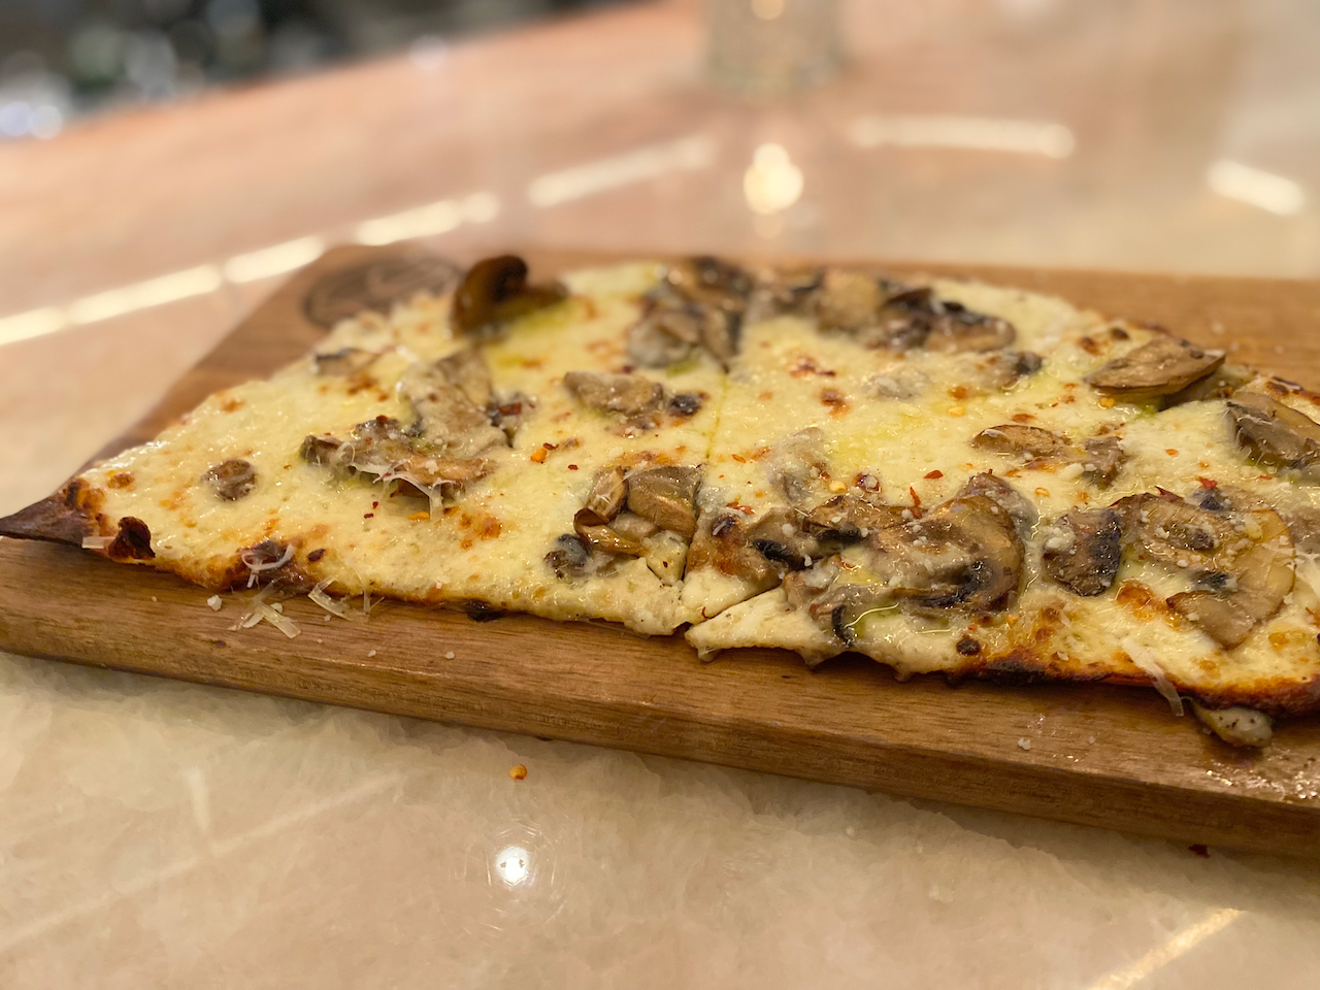 Half a Roman Tonda-style pizza with a thin, cracker-like crust.